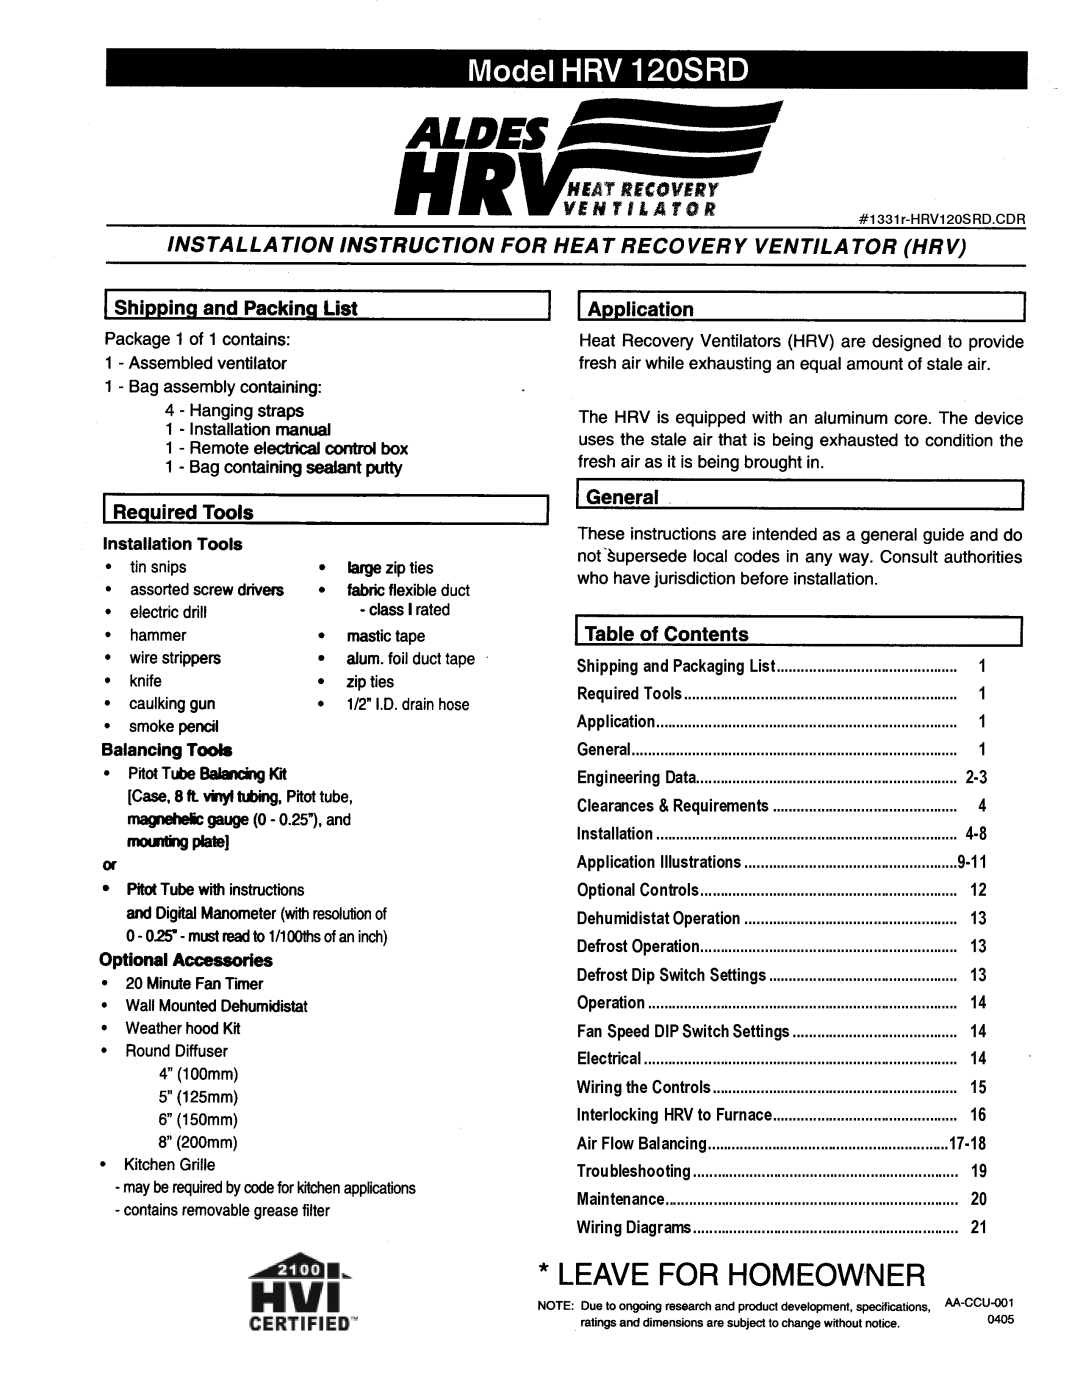 American Aldes HRV 120SRD manual 